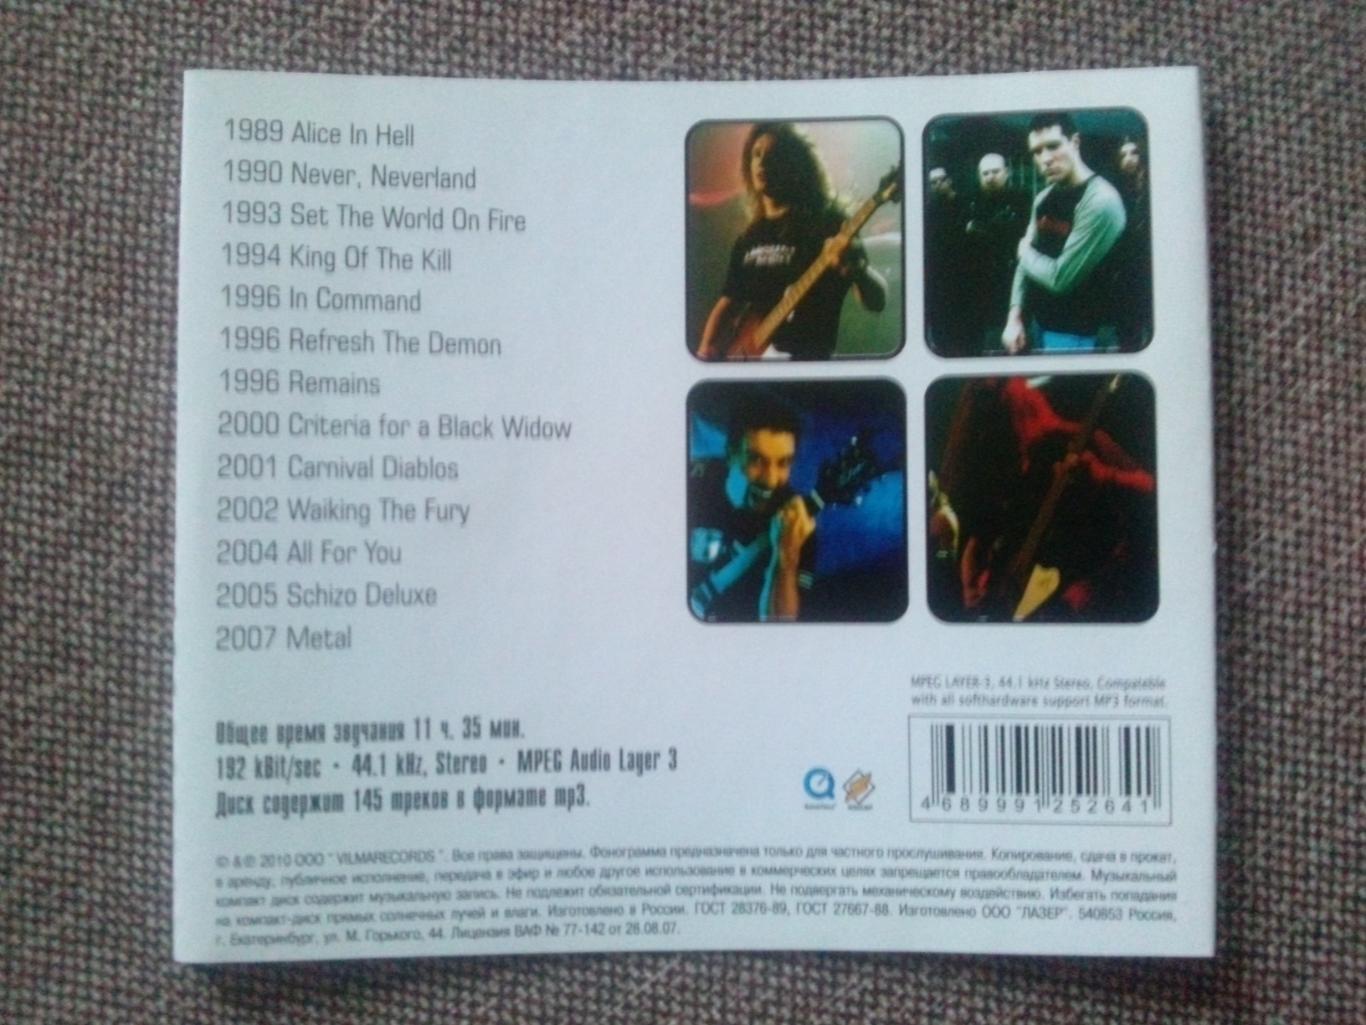 MP - 3 CD : группа Annihilator 1989 - 2007 гг. (13 альбомов) Thrash metal Рок 6